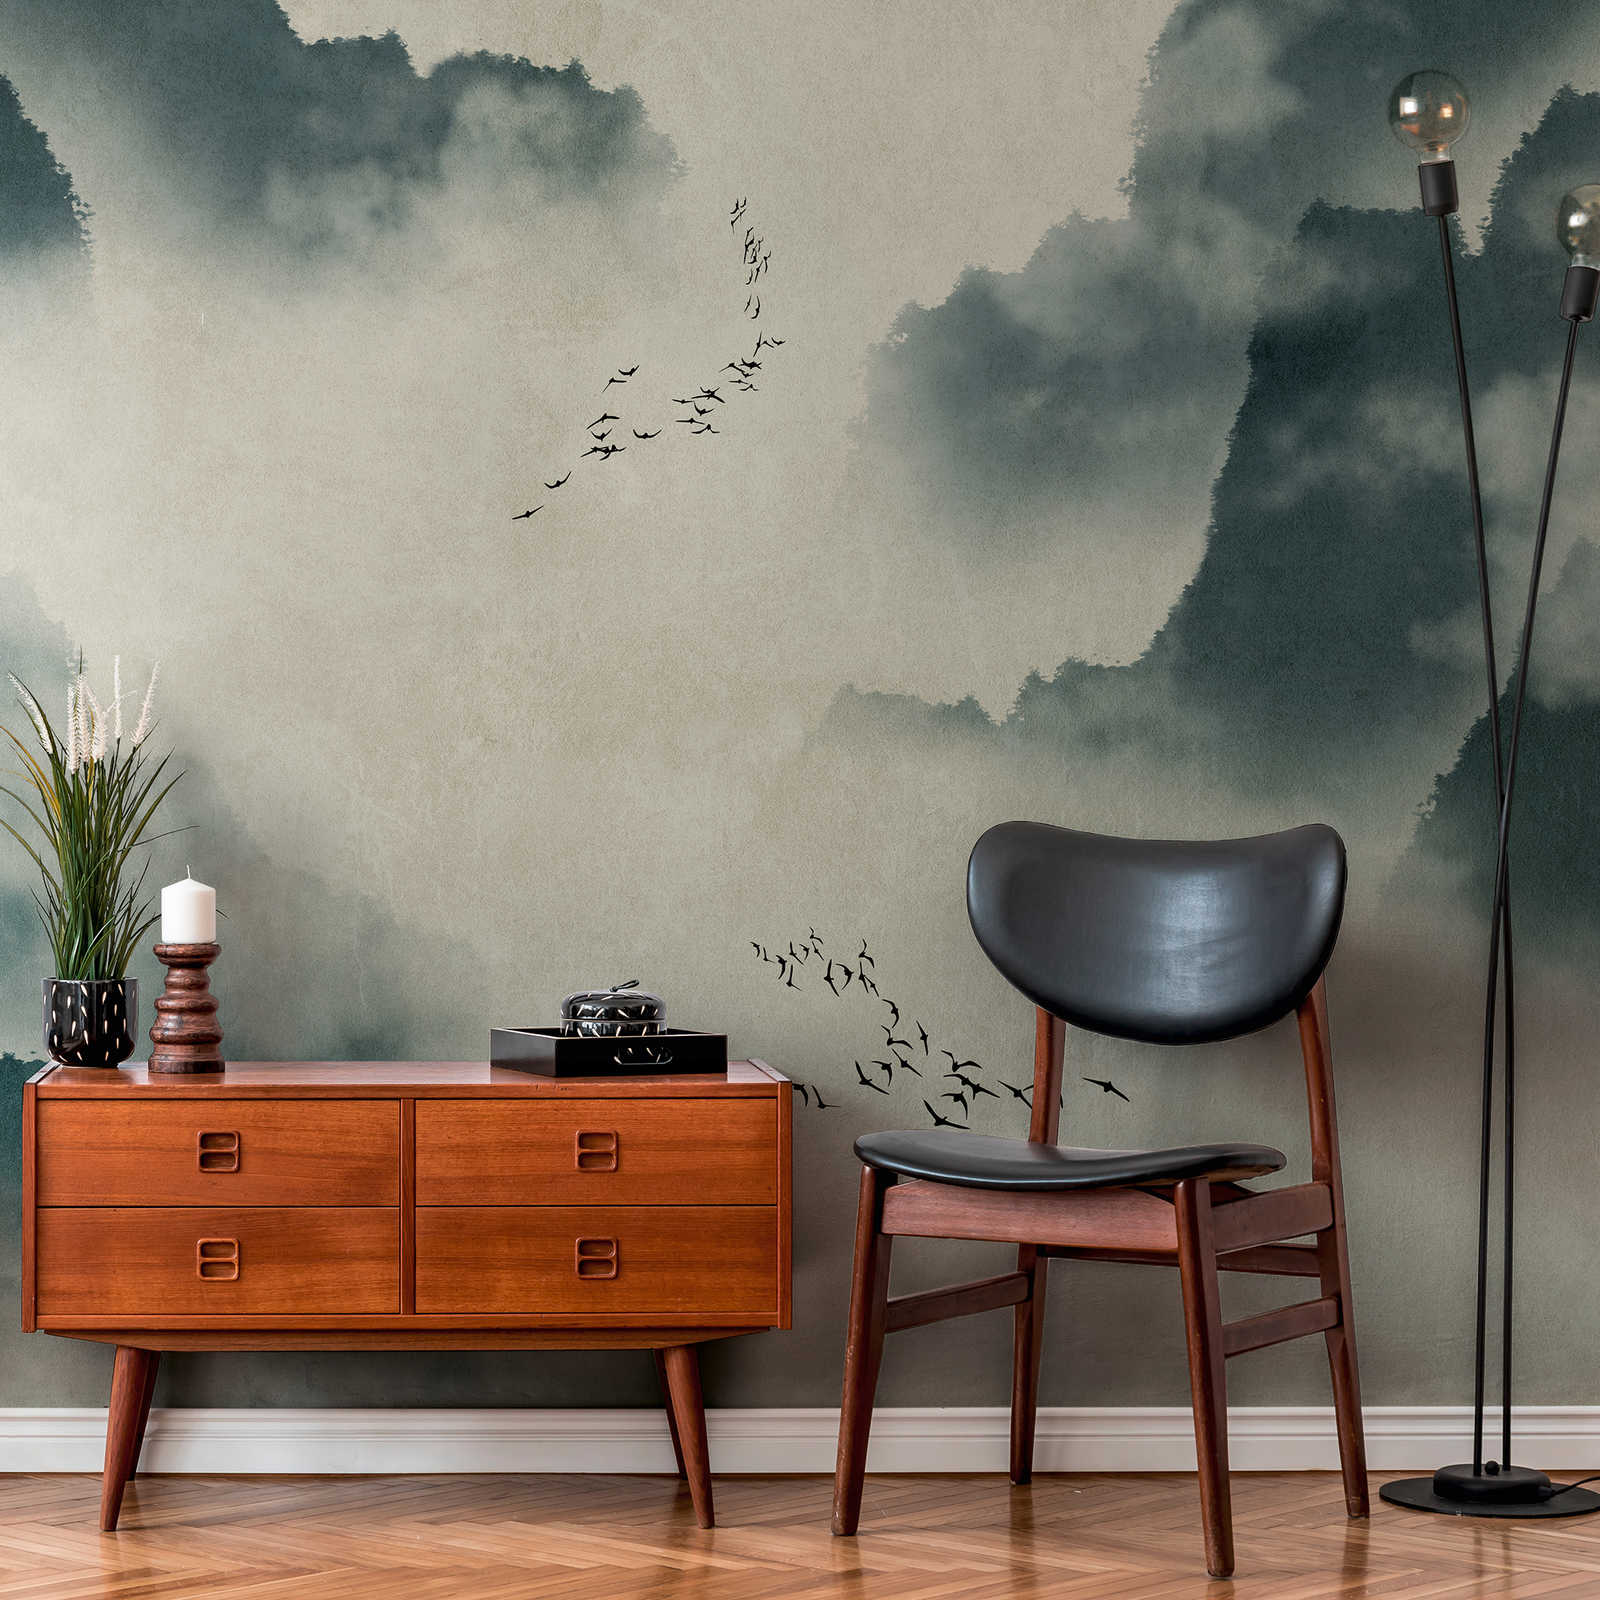         Wallpaper novelty | watercolour motif wallpaper with mountains, fog & flock of birds
    